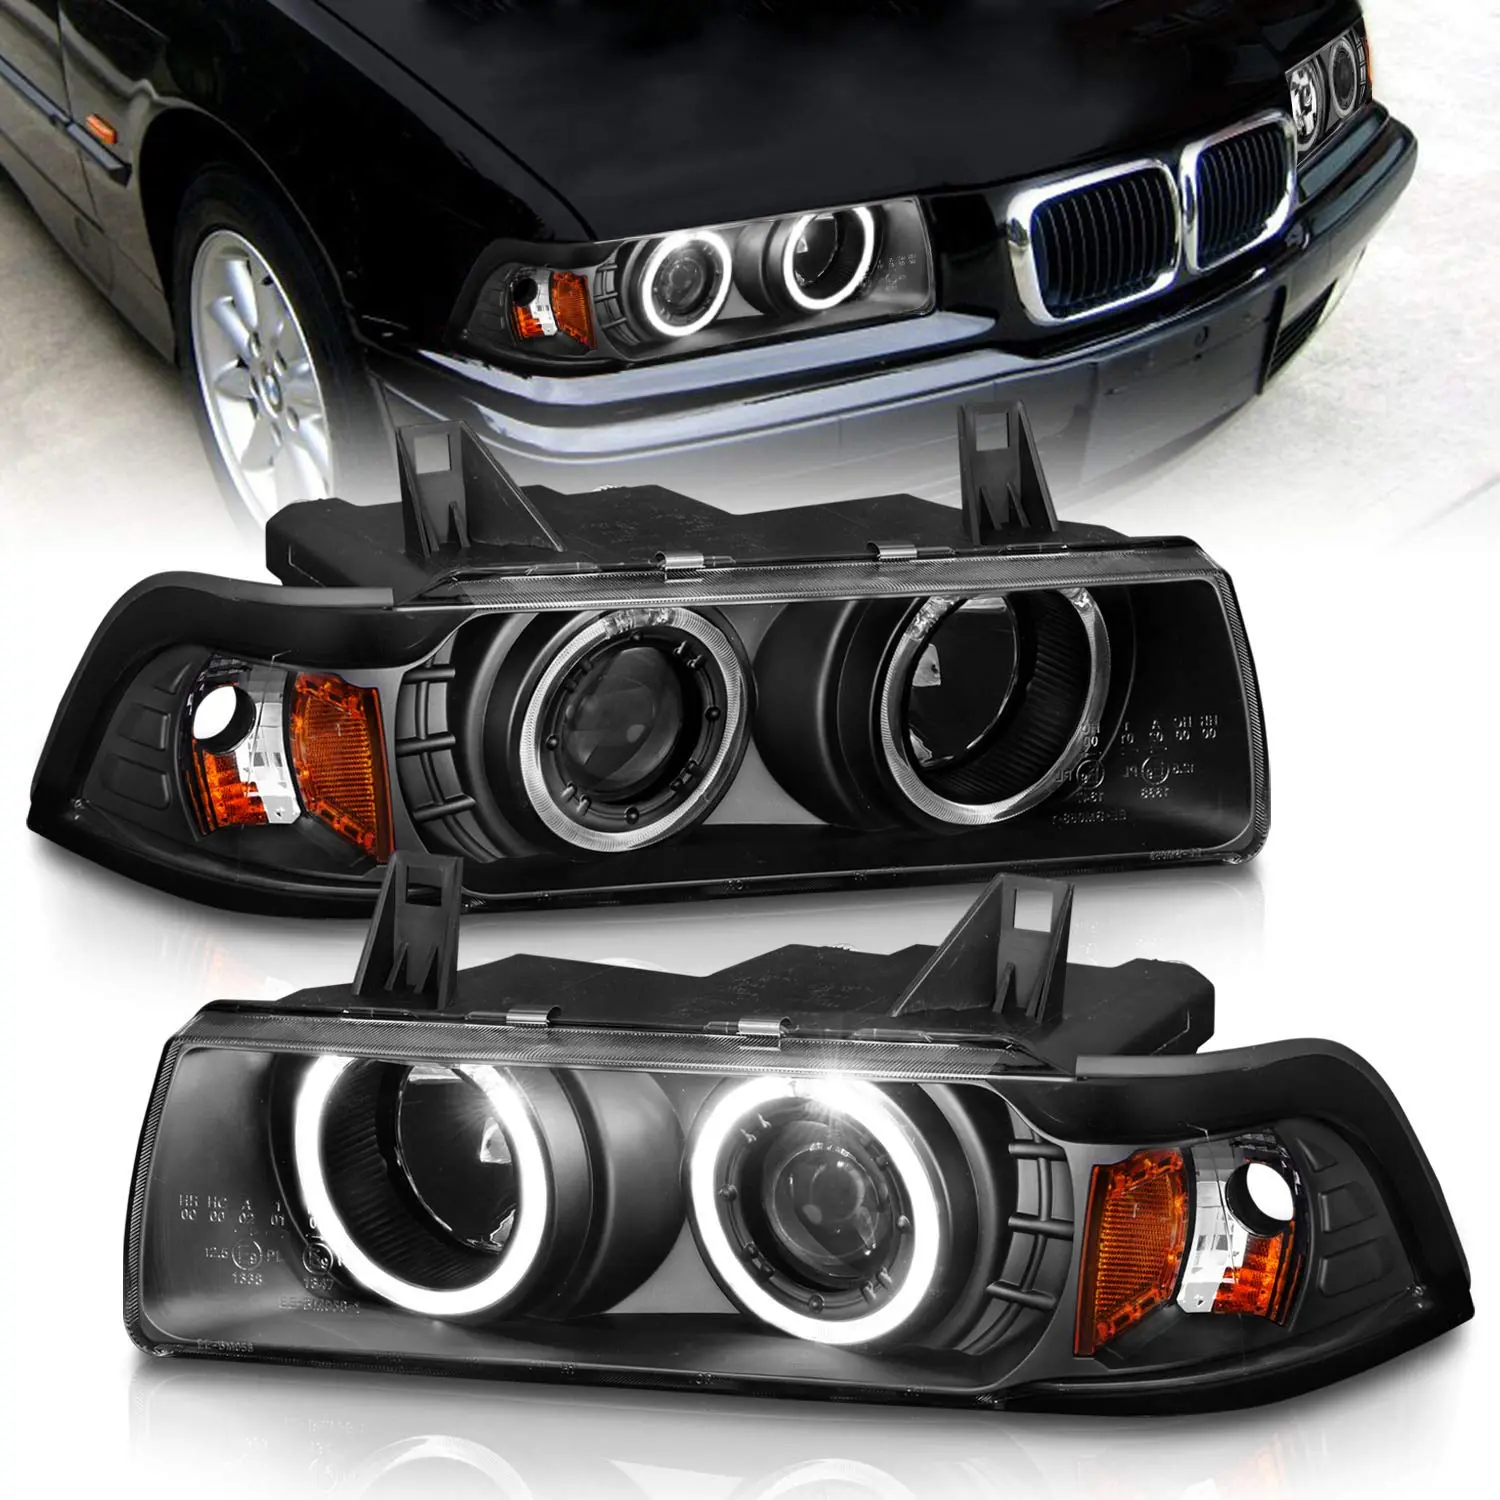 e36 smoked headlights - Are all E36 headlights the same